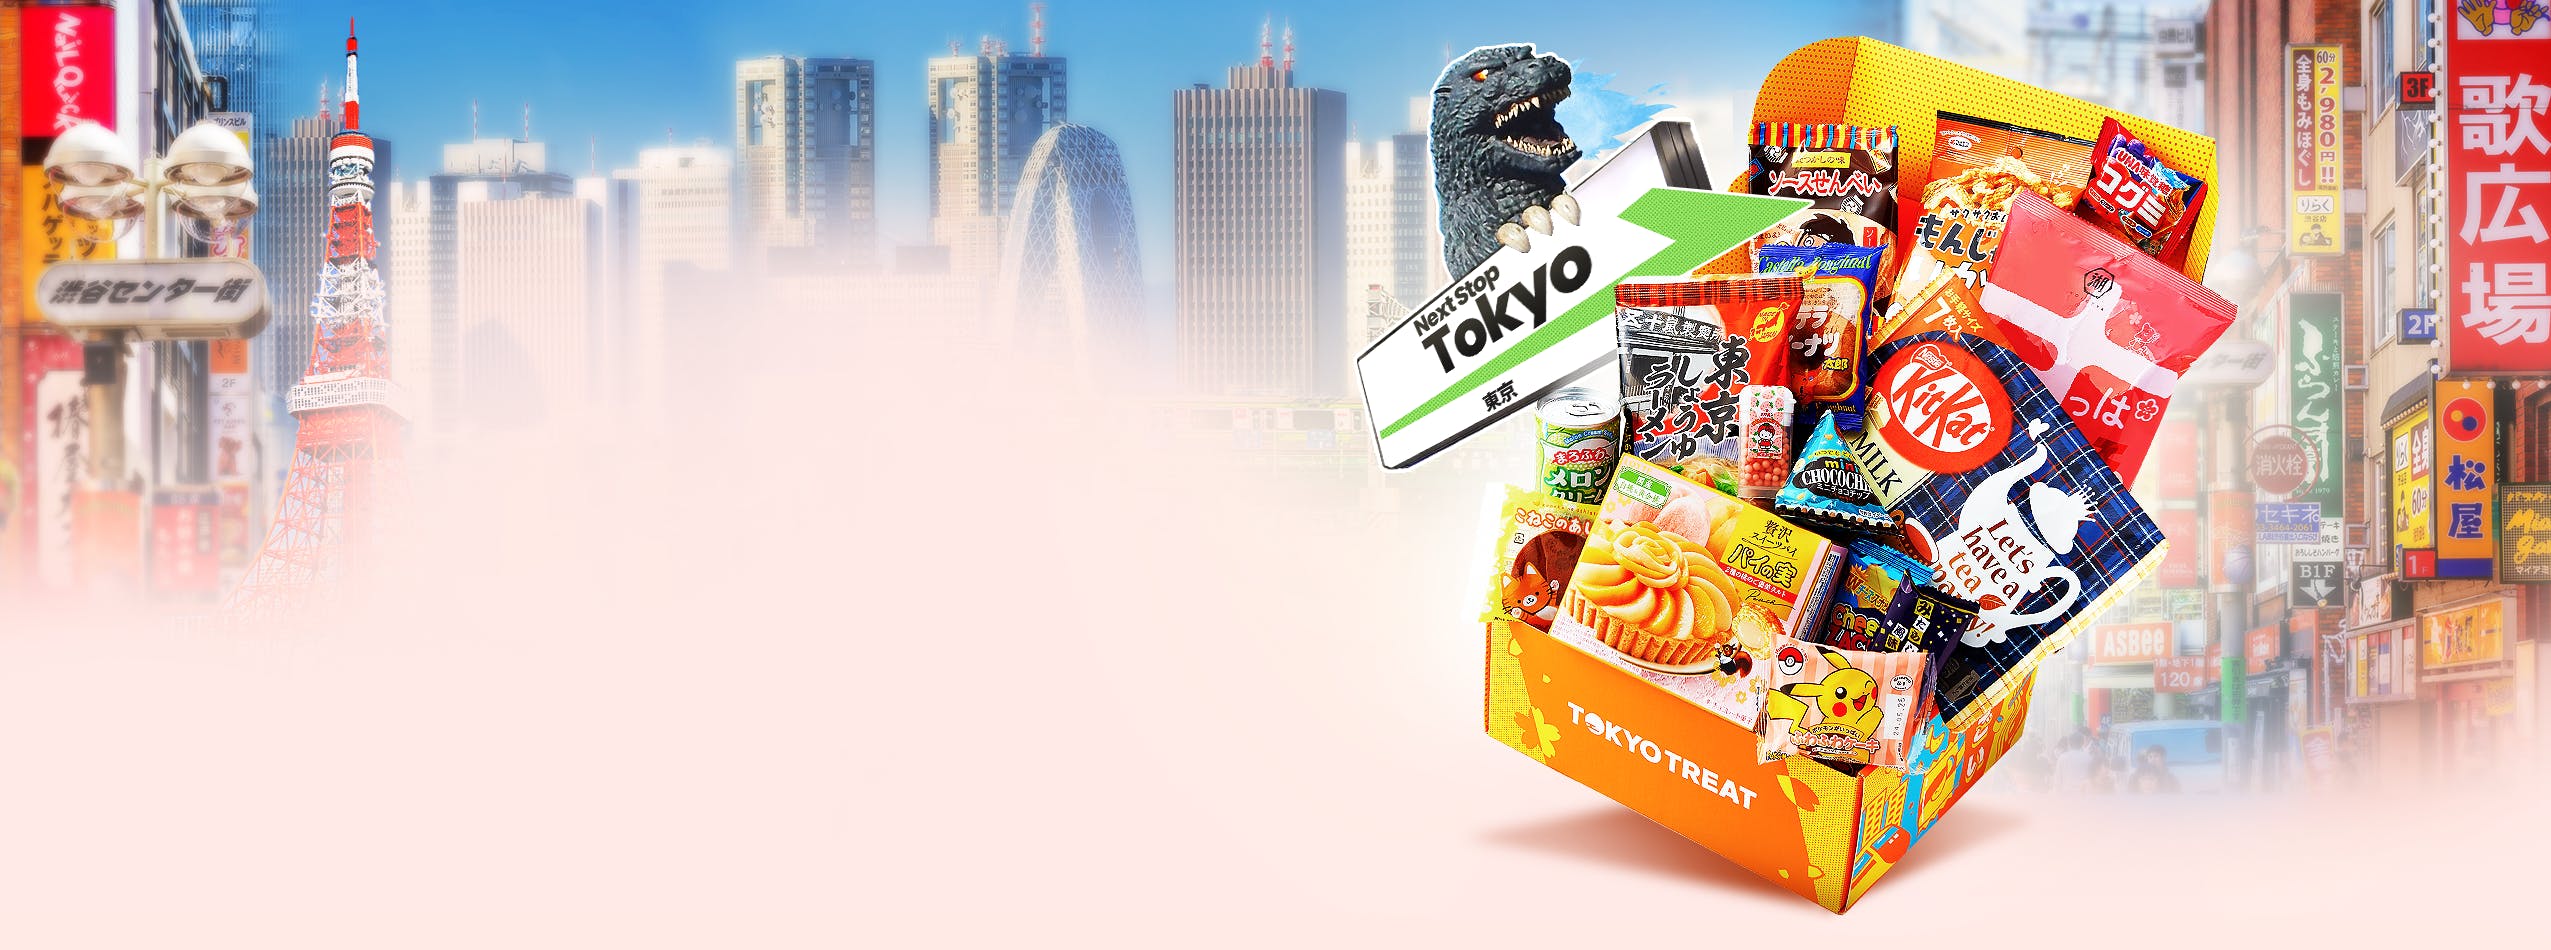 Japanese Snack Box TokyoTreat